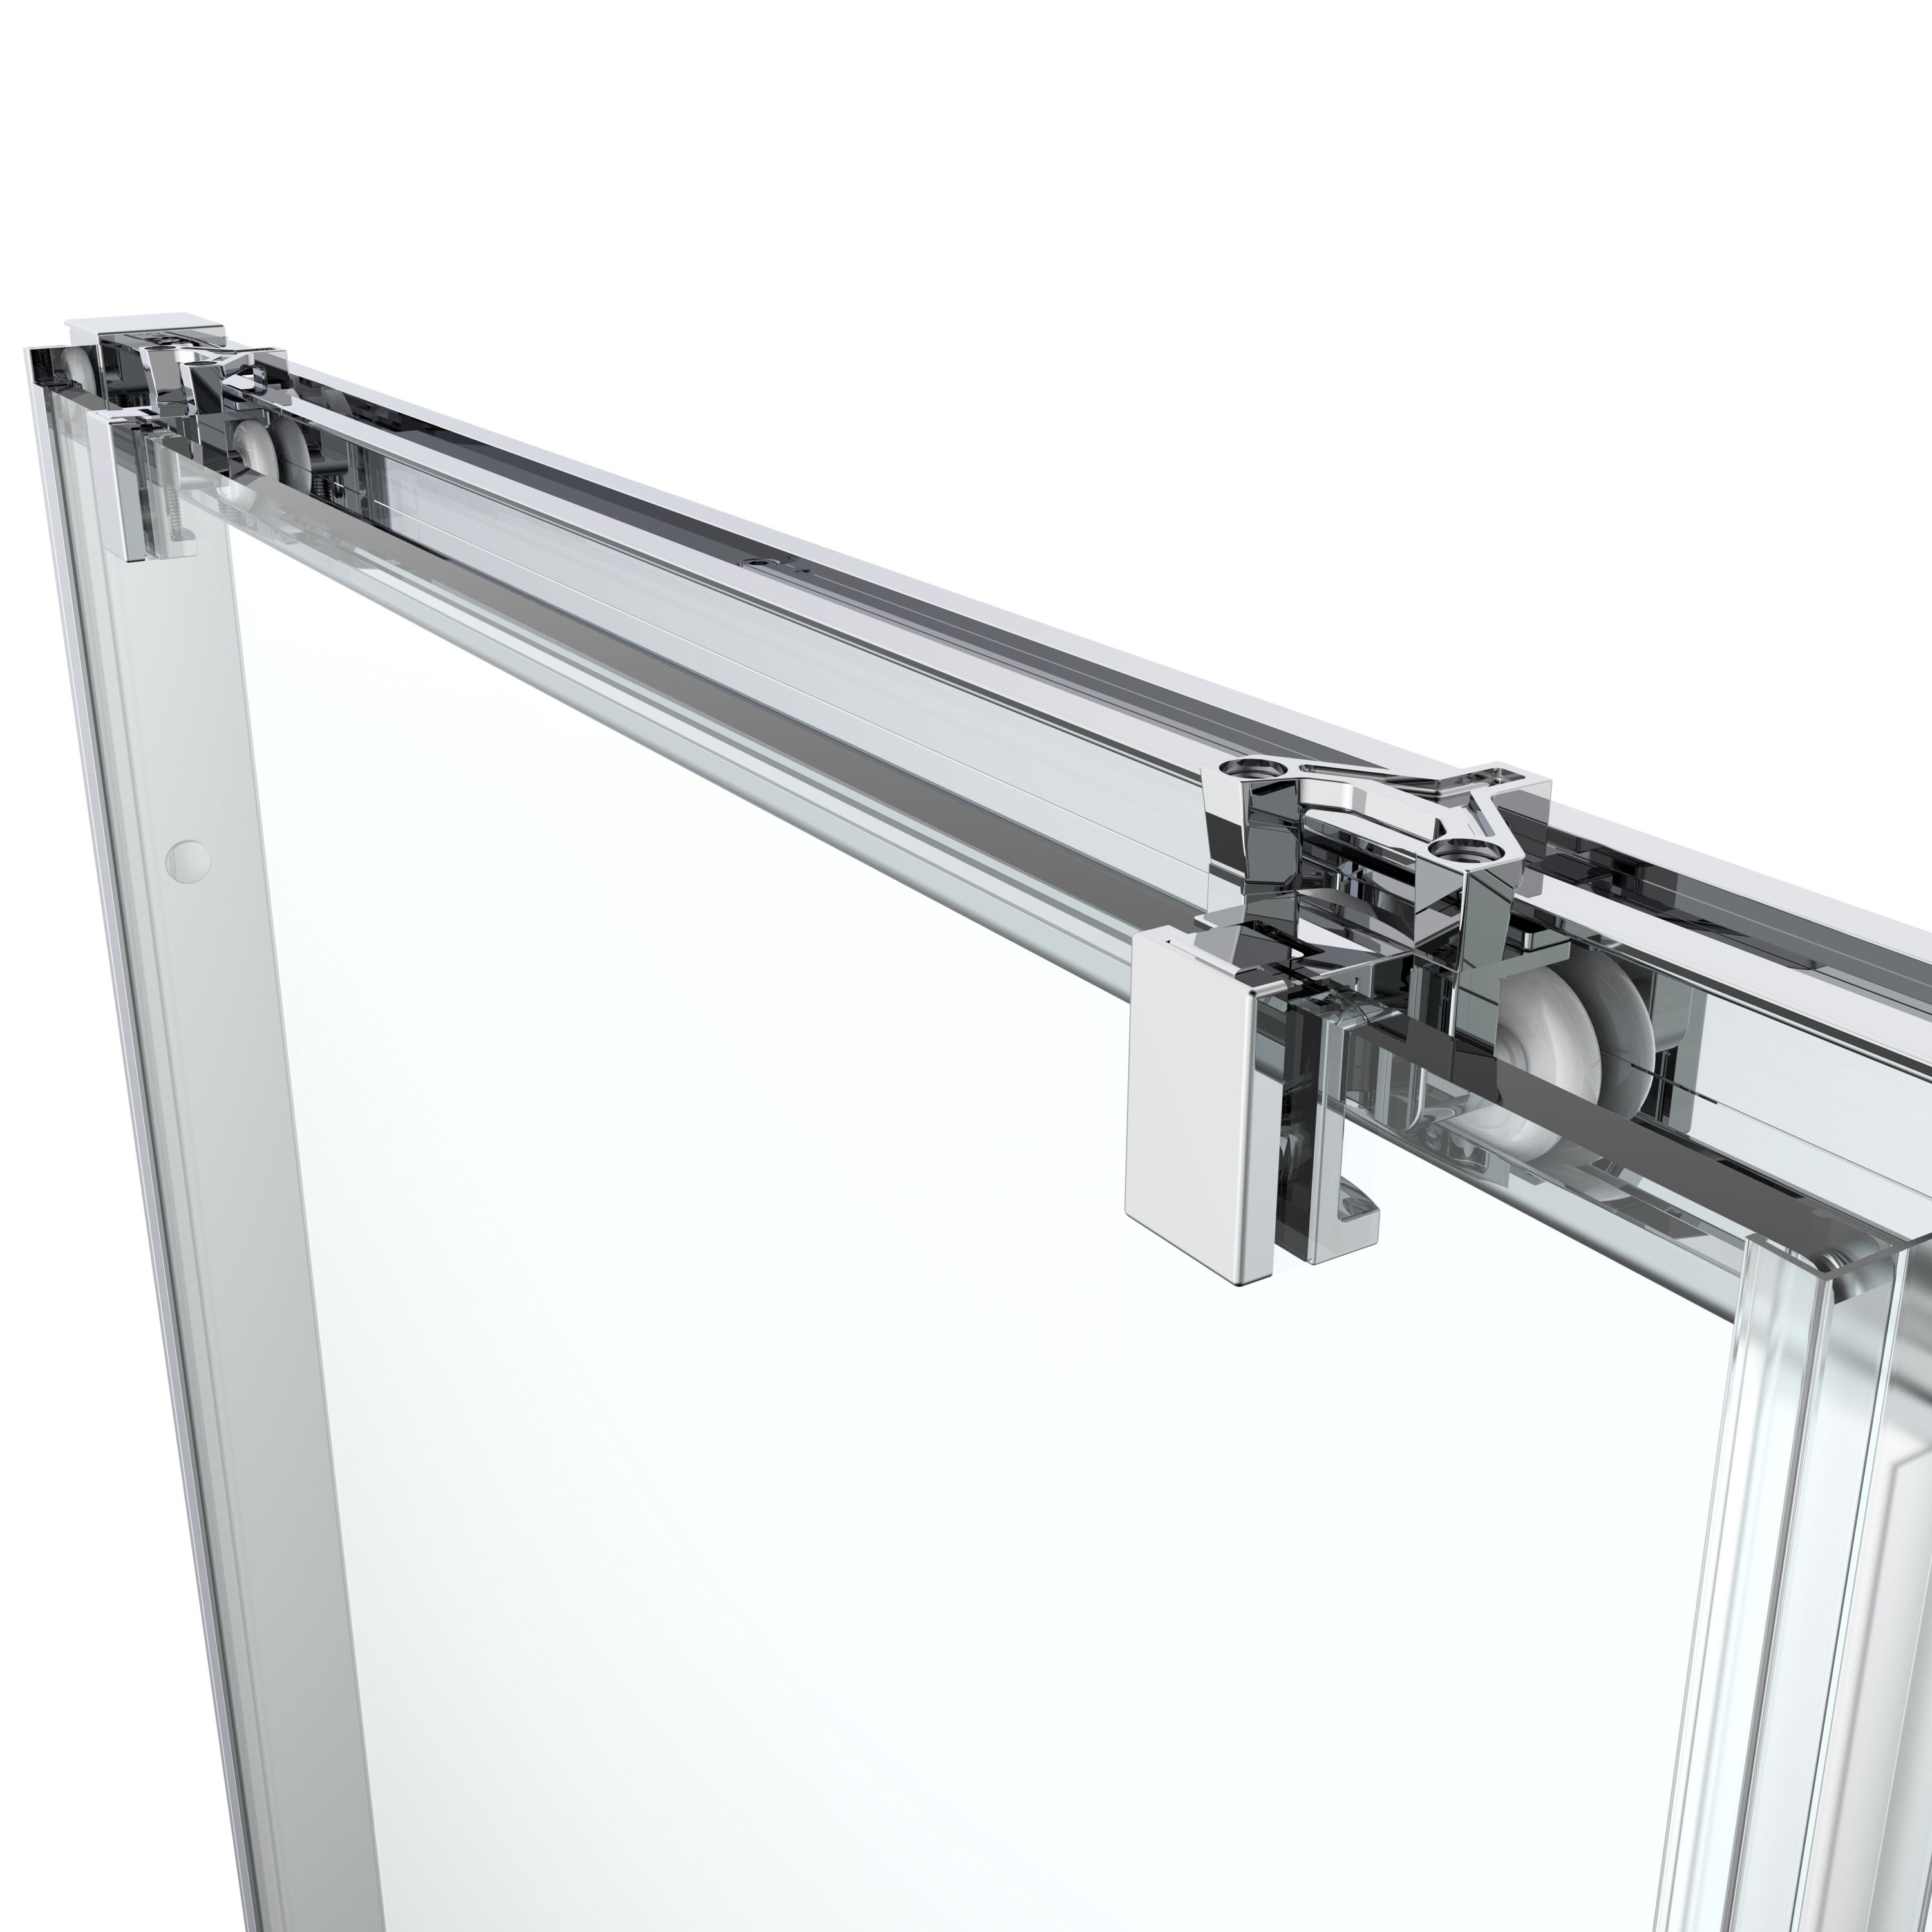 GoodHome Ledava Minimal frame Chrome effect Mirror Strip Sliding Shower Door (H)195cm (W)160cm